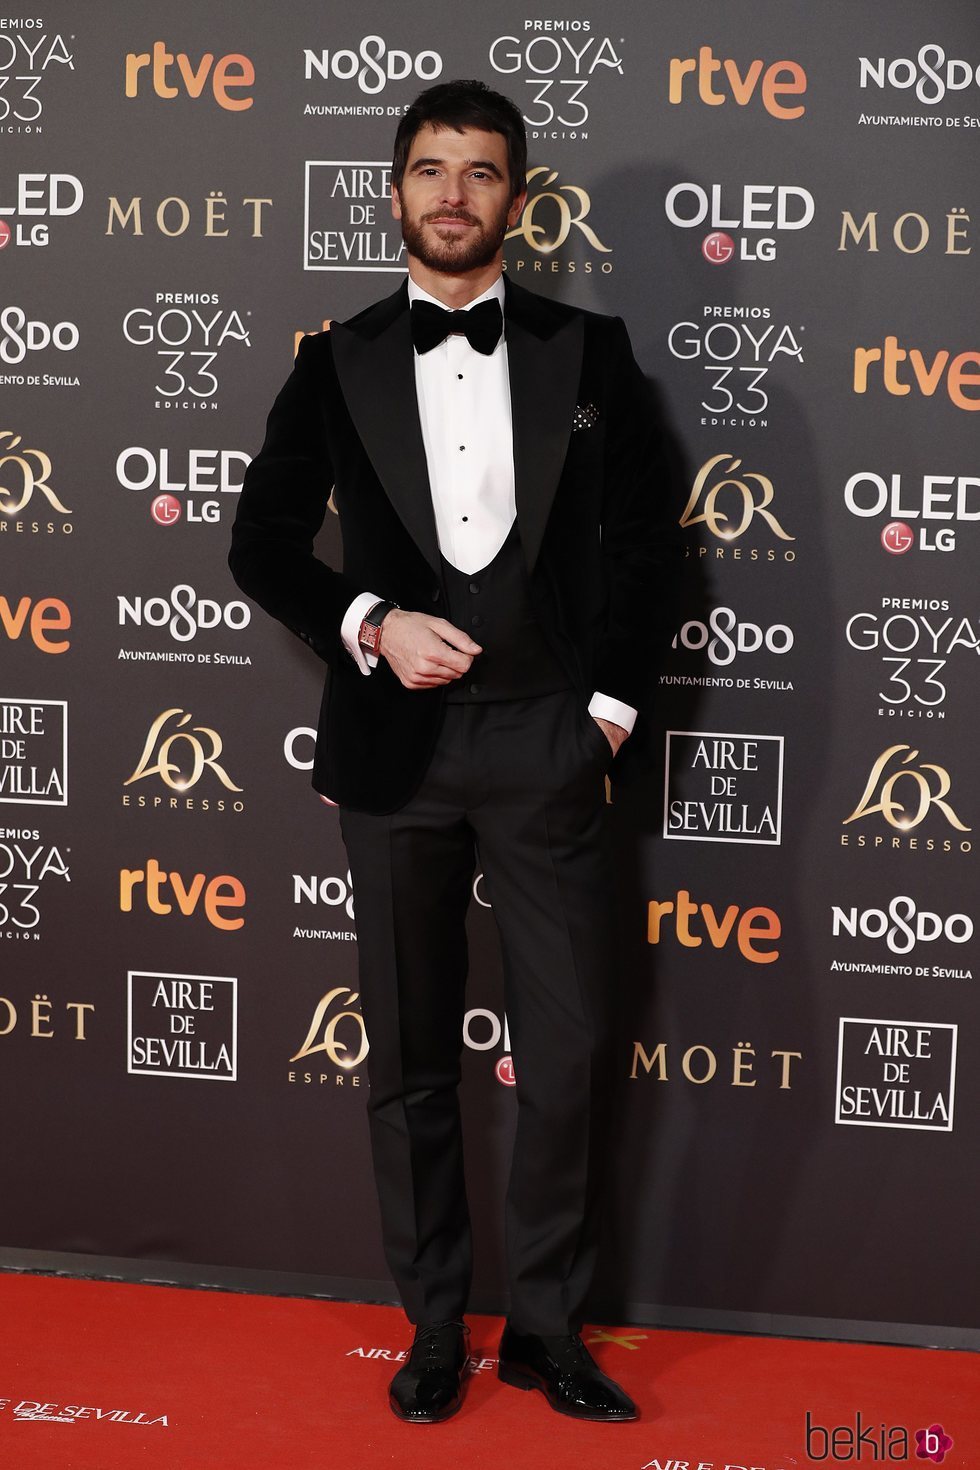 Alfonso Bassave en la alfombra roja de los Premios Goya 2019